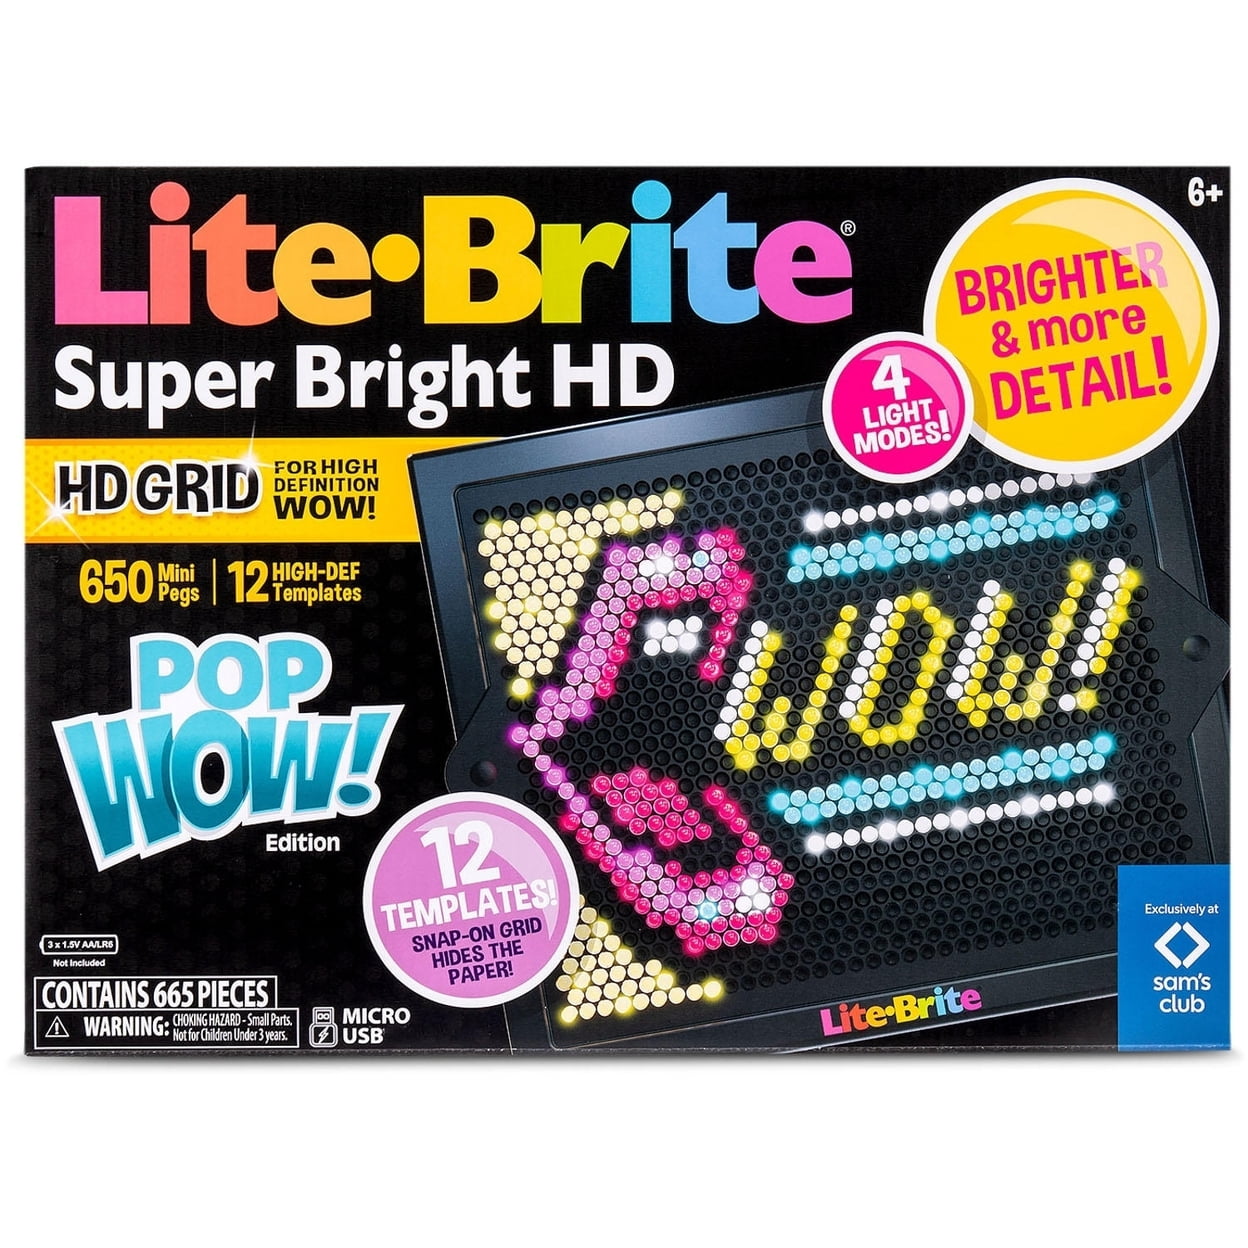 Only 20.99 usd for Lite-Brite, Super Bright HD Pokemon Great deals!